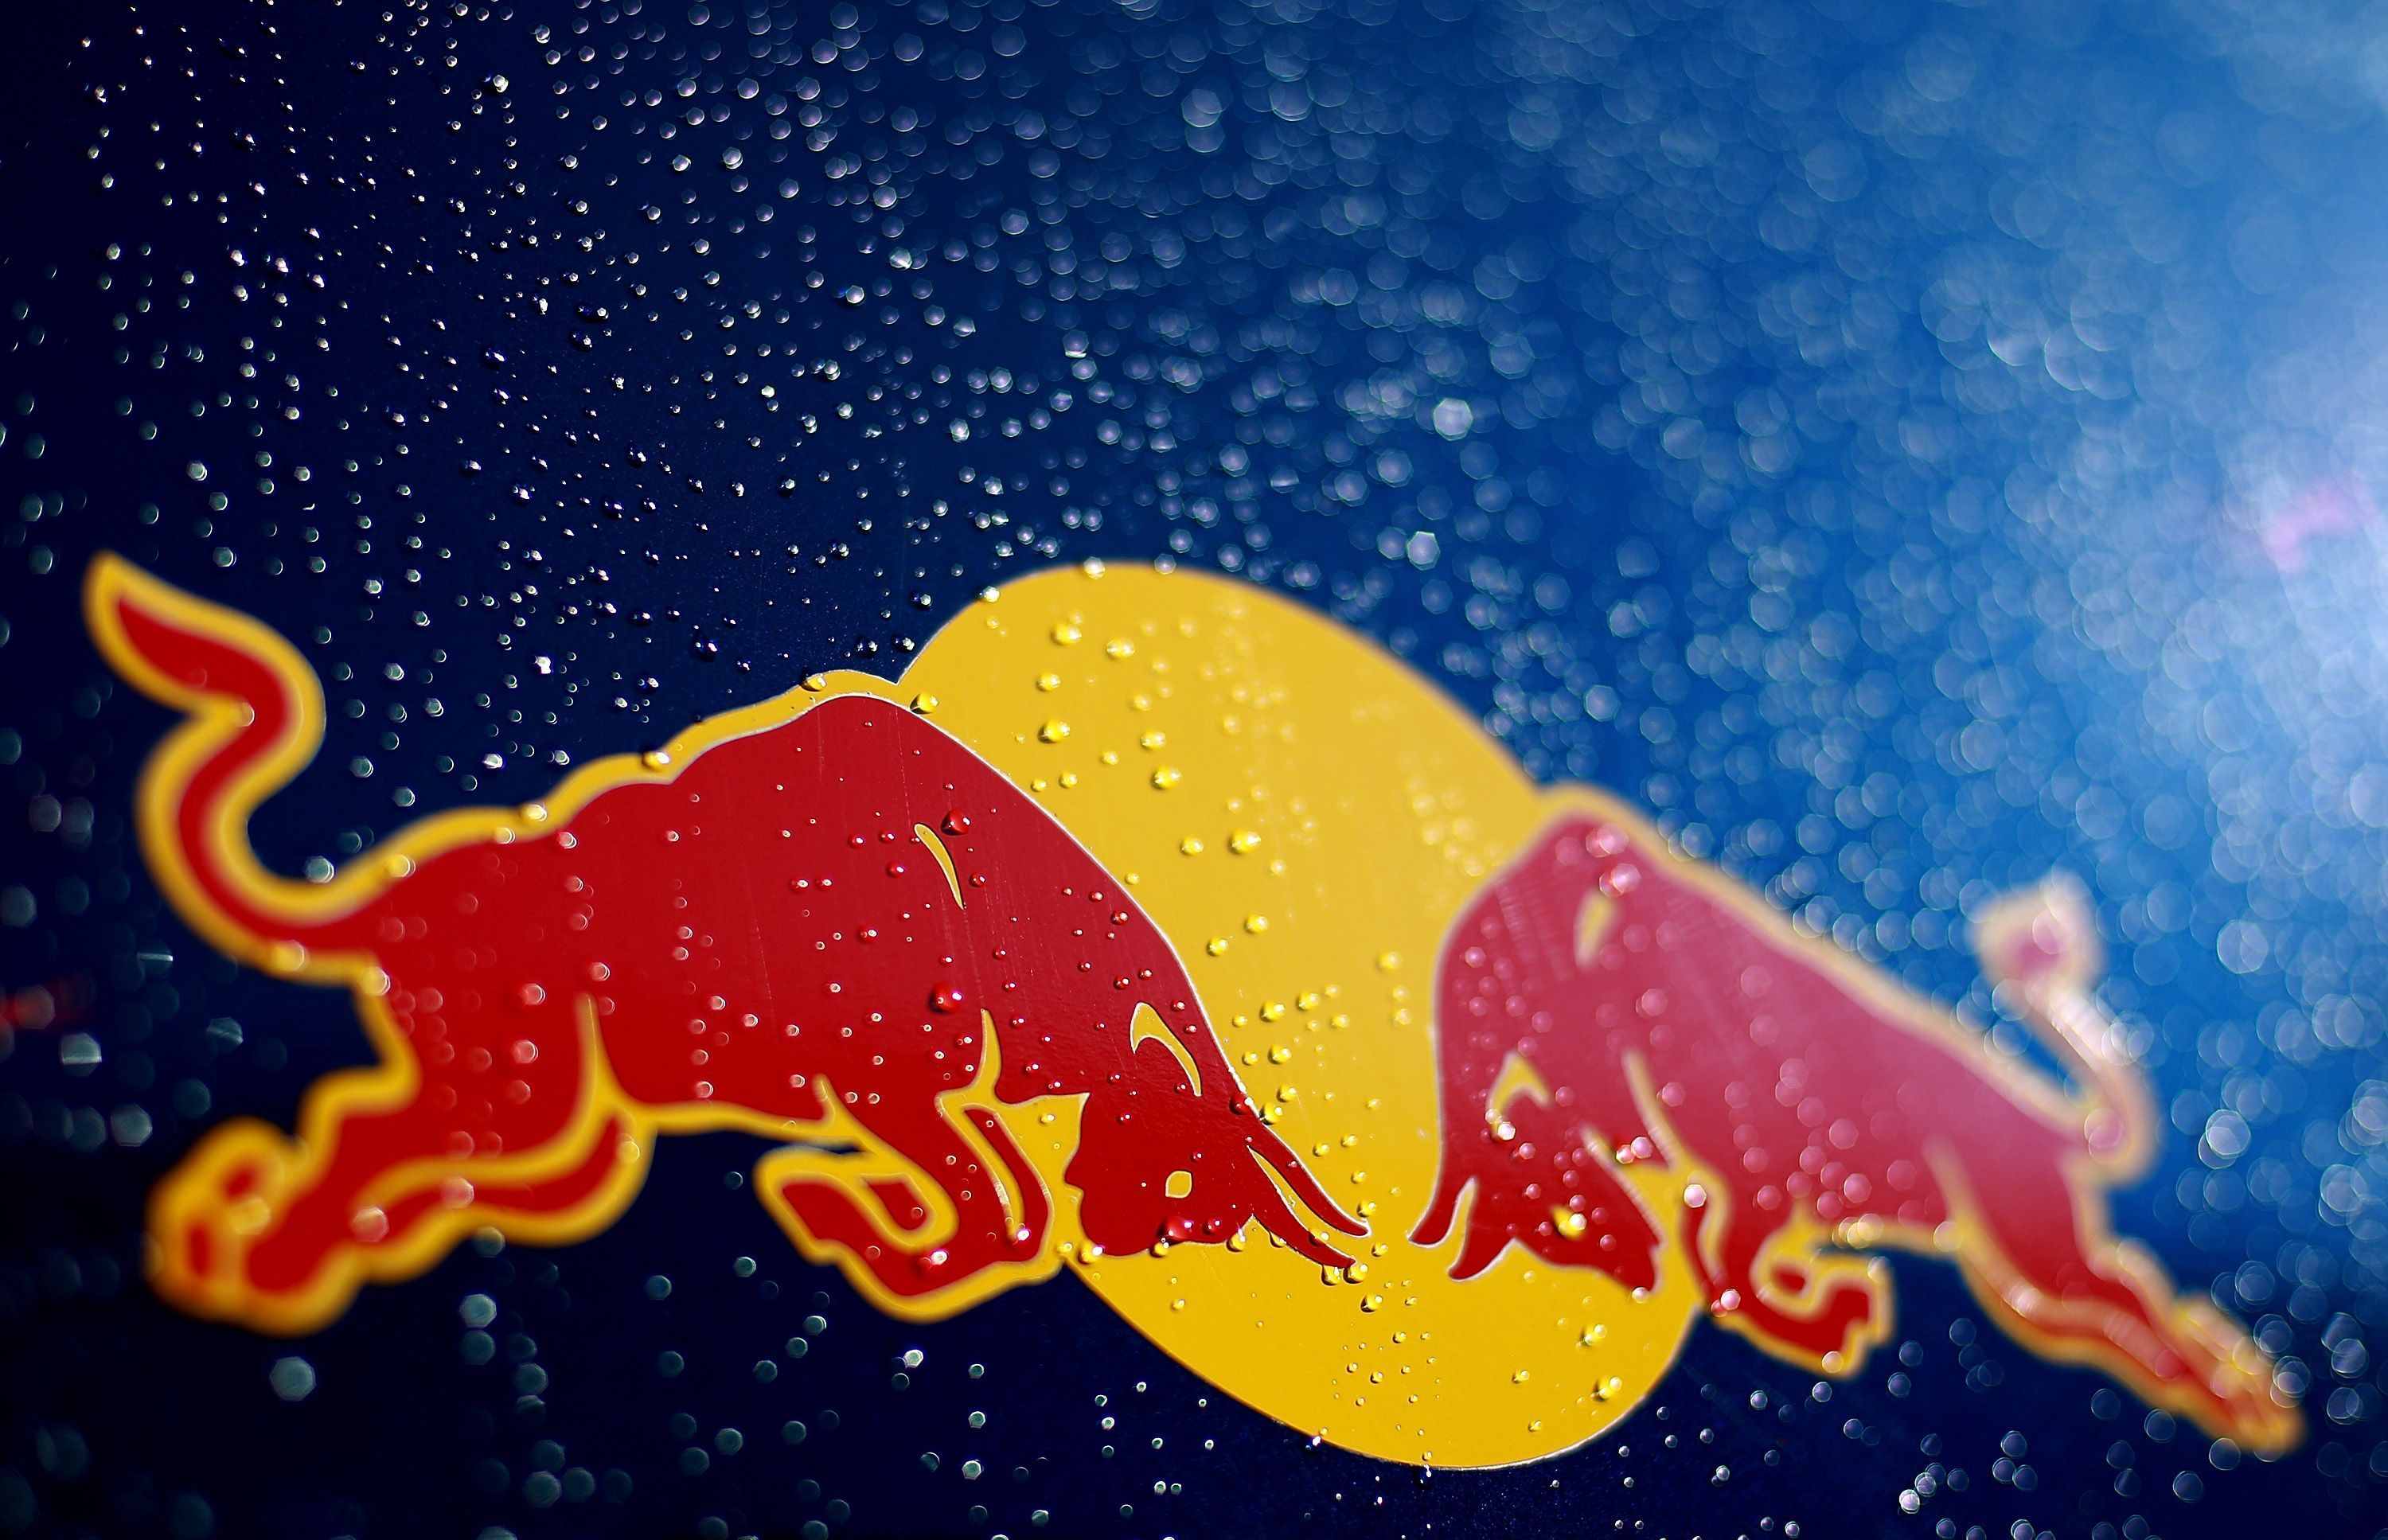 Red Bull Logo Wallpaper - wallpaper